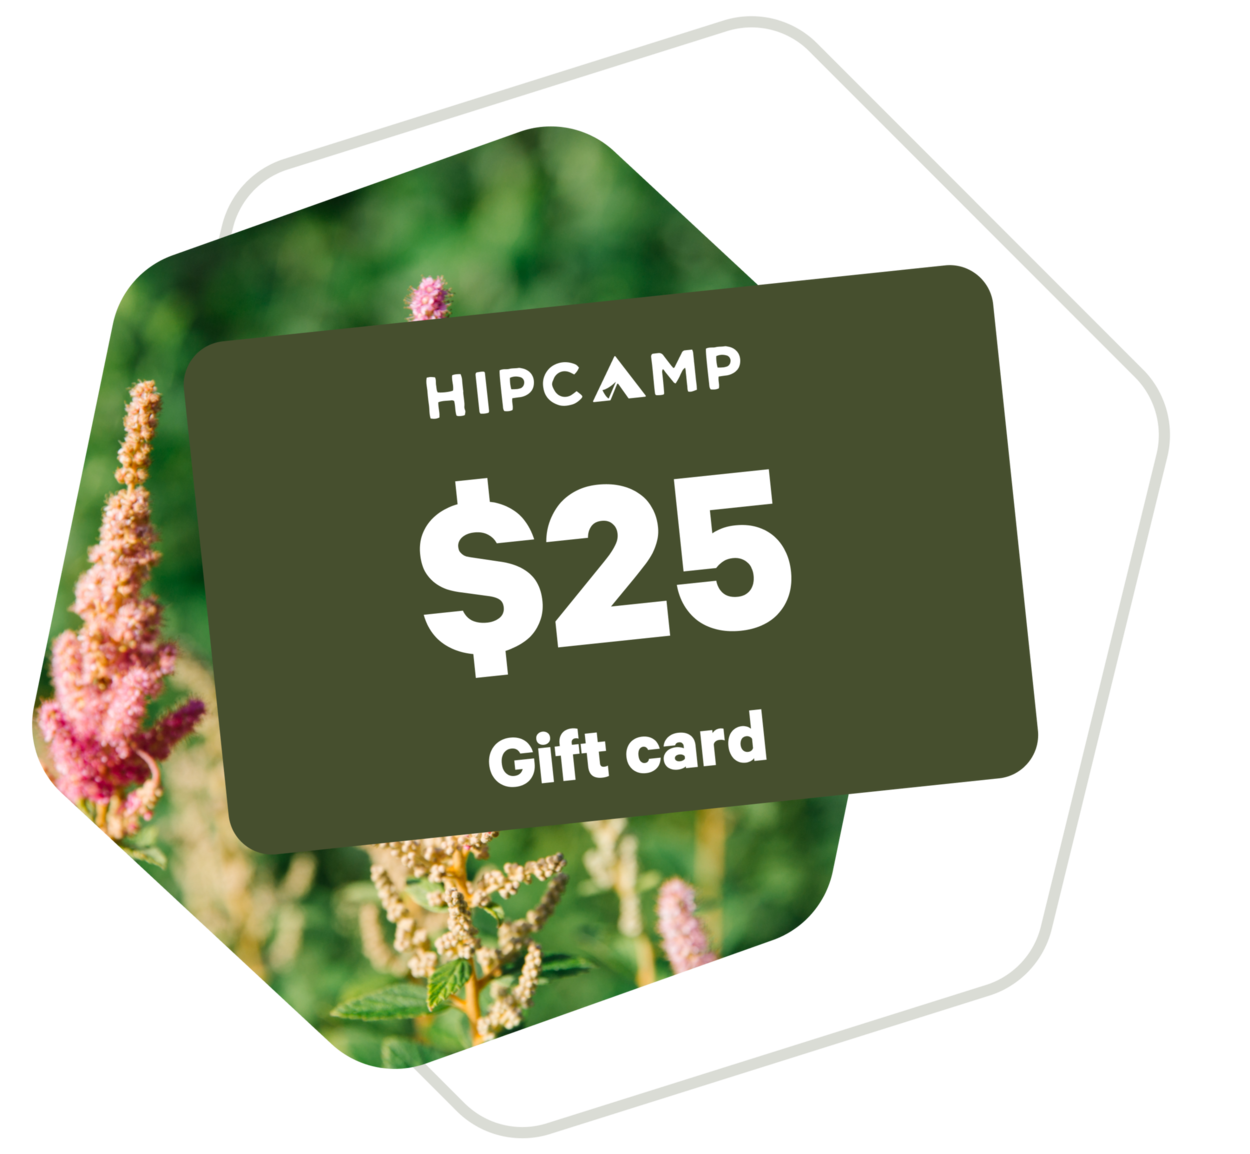 HipCamp $25 Gift card